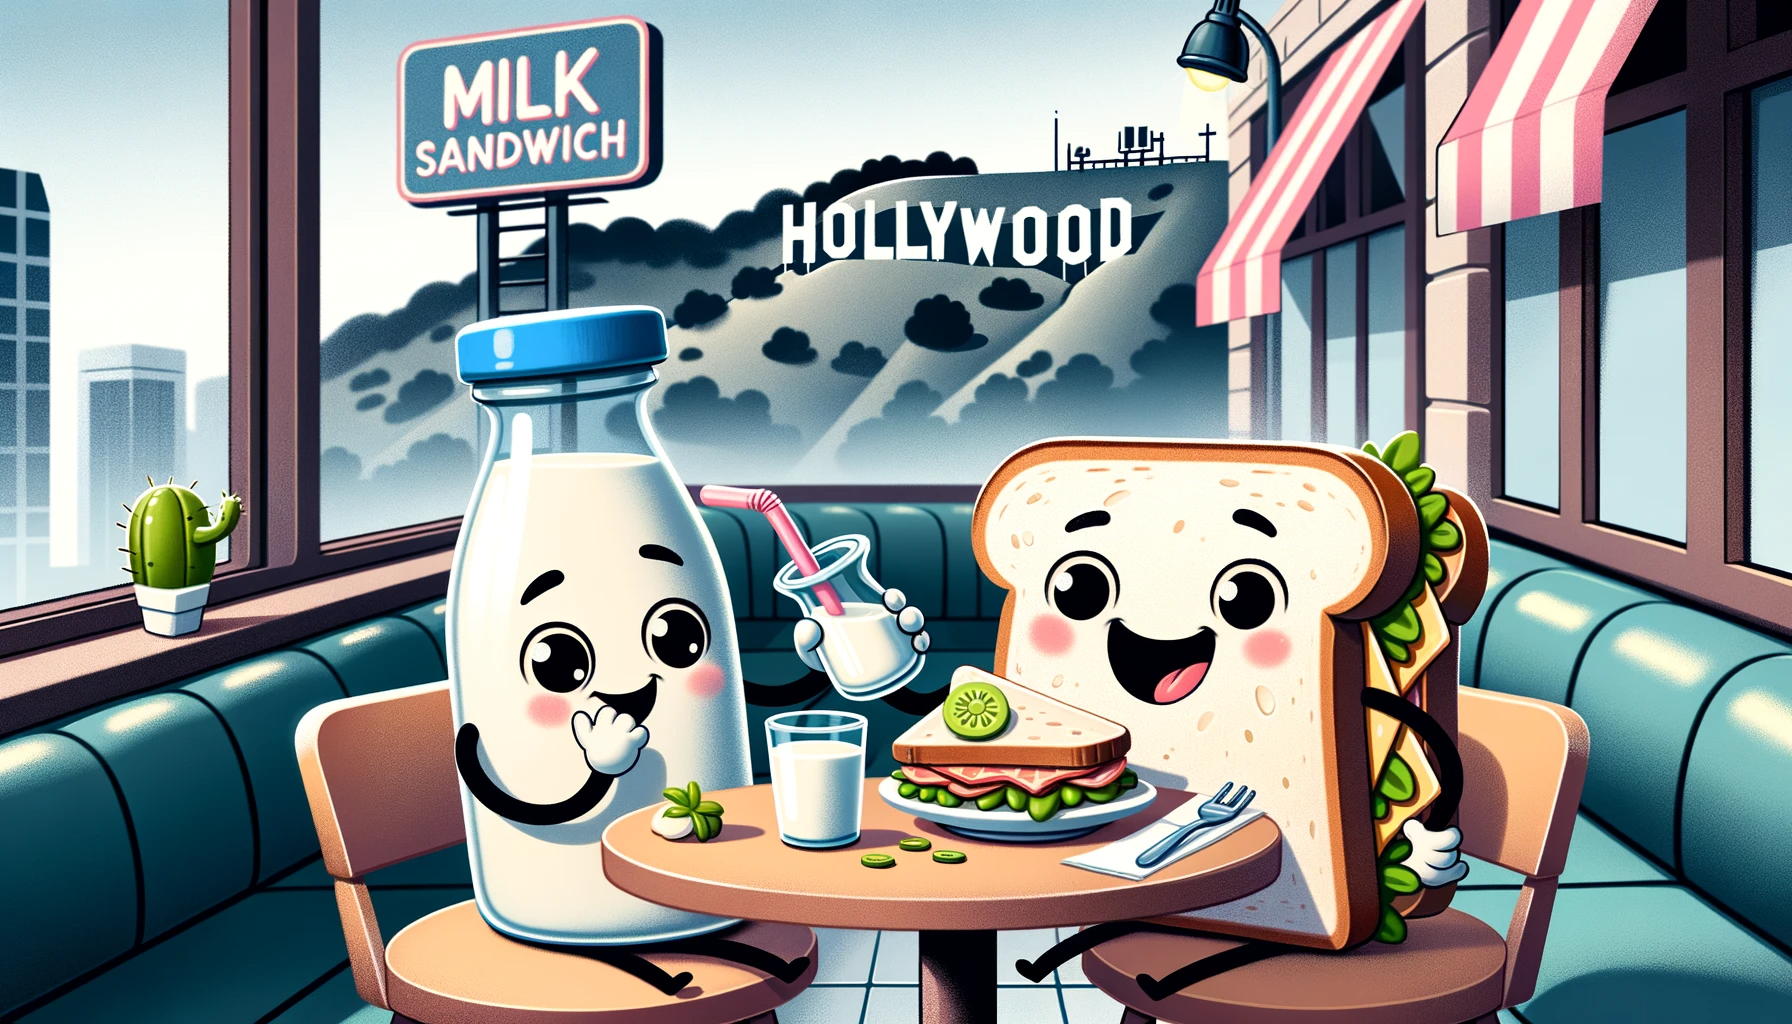 illustrated milk bottle and sandwich having breakfast